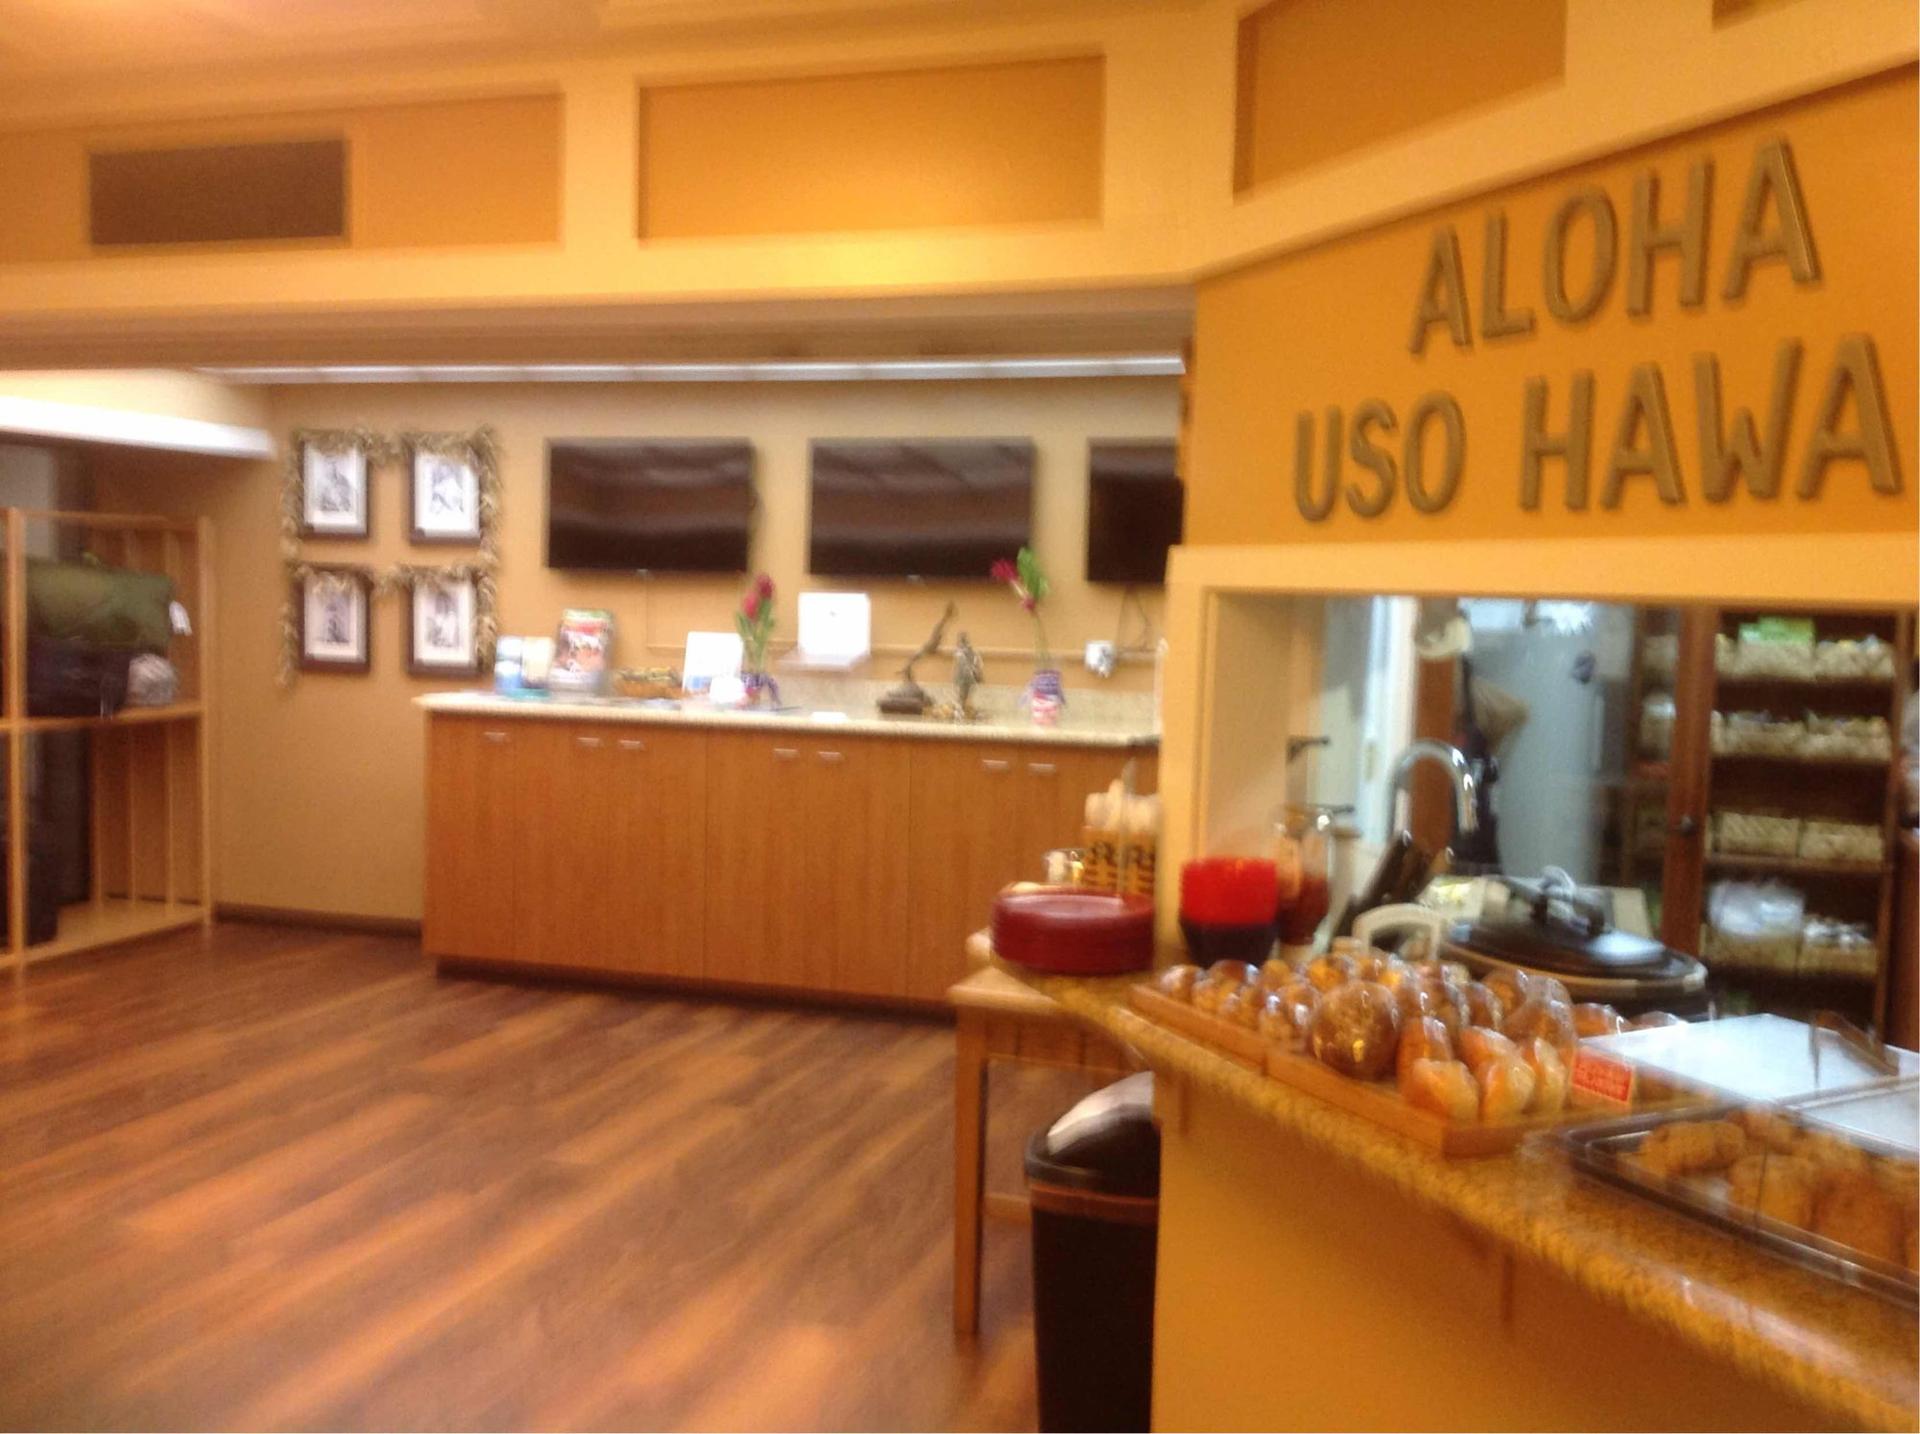 USO Honolulu International Airport image 2 of 2